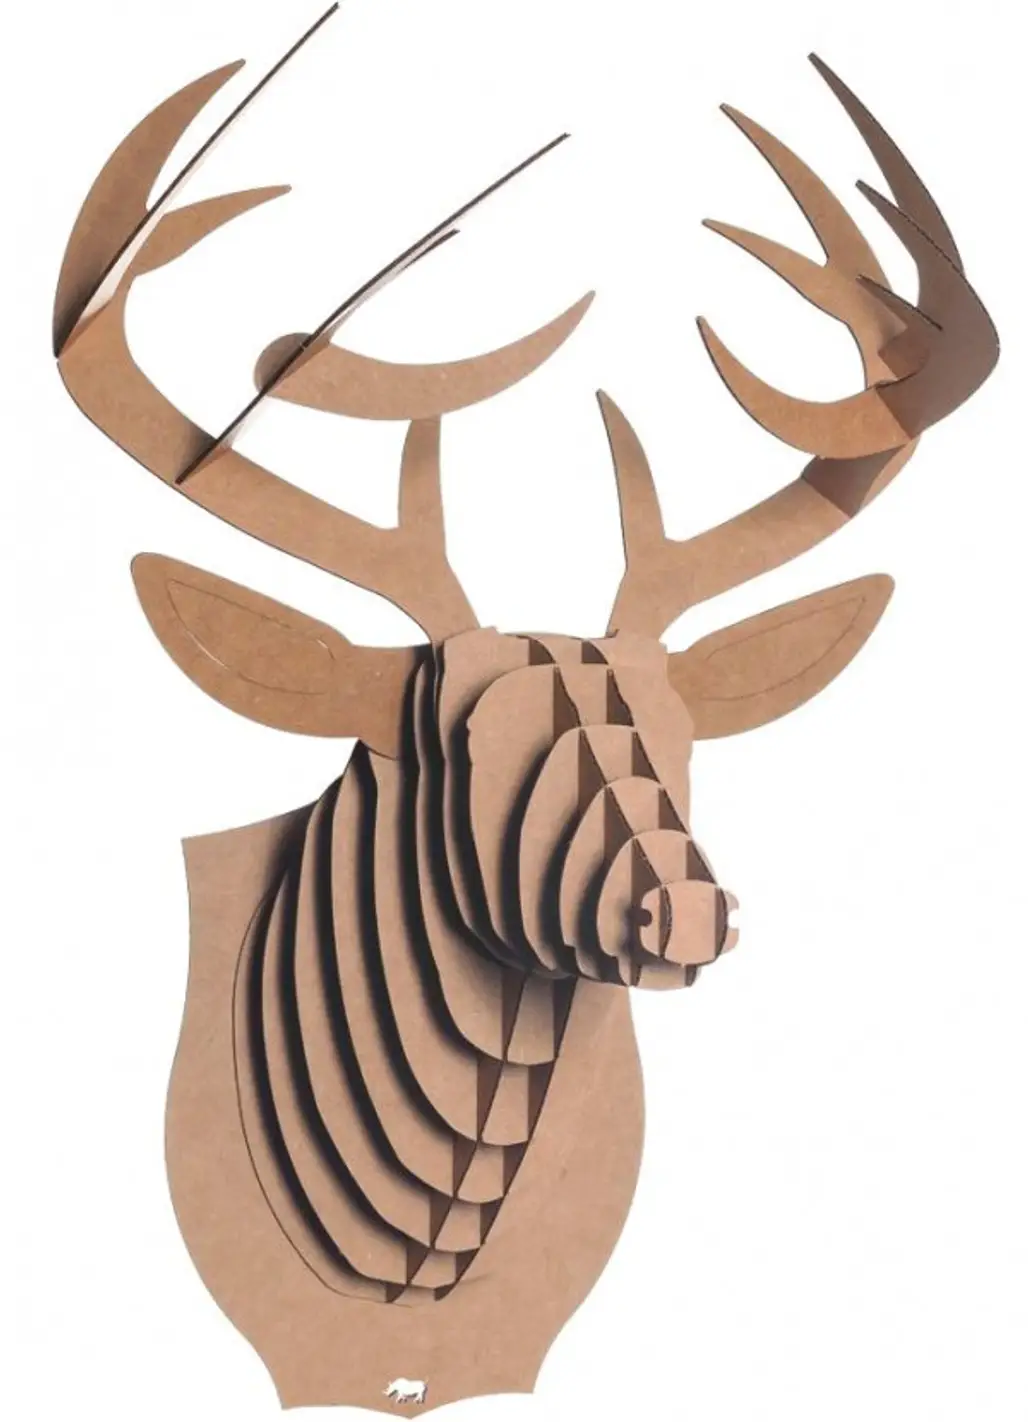 Bucky the Deer Recycled Cardboard Sculpture